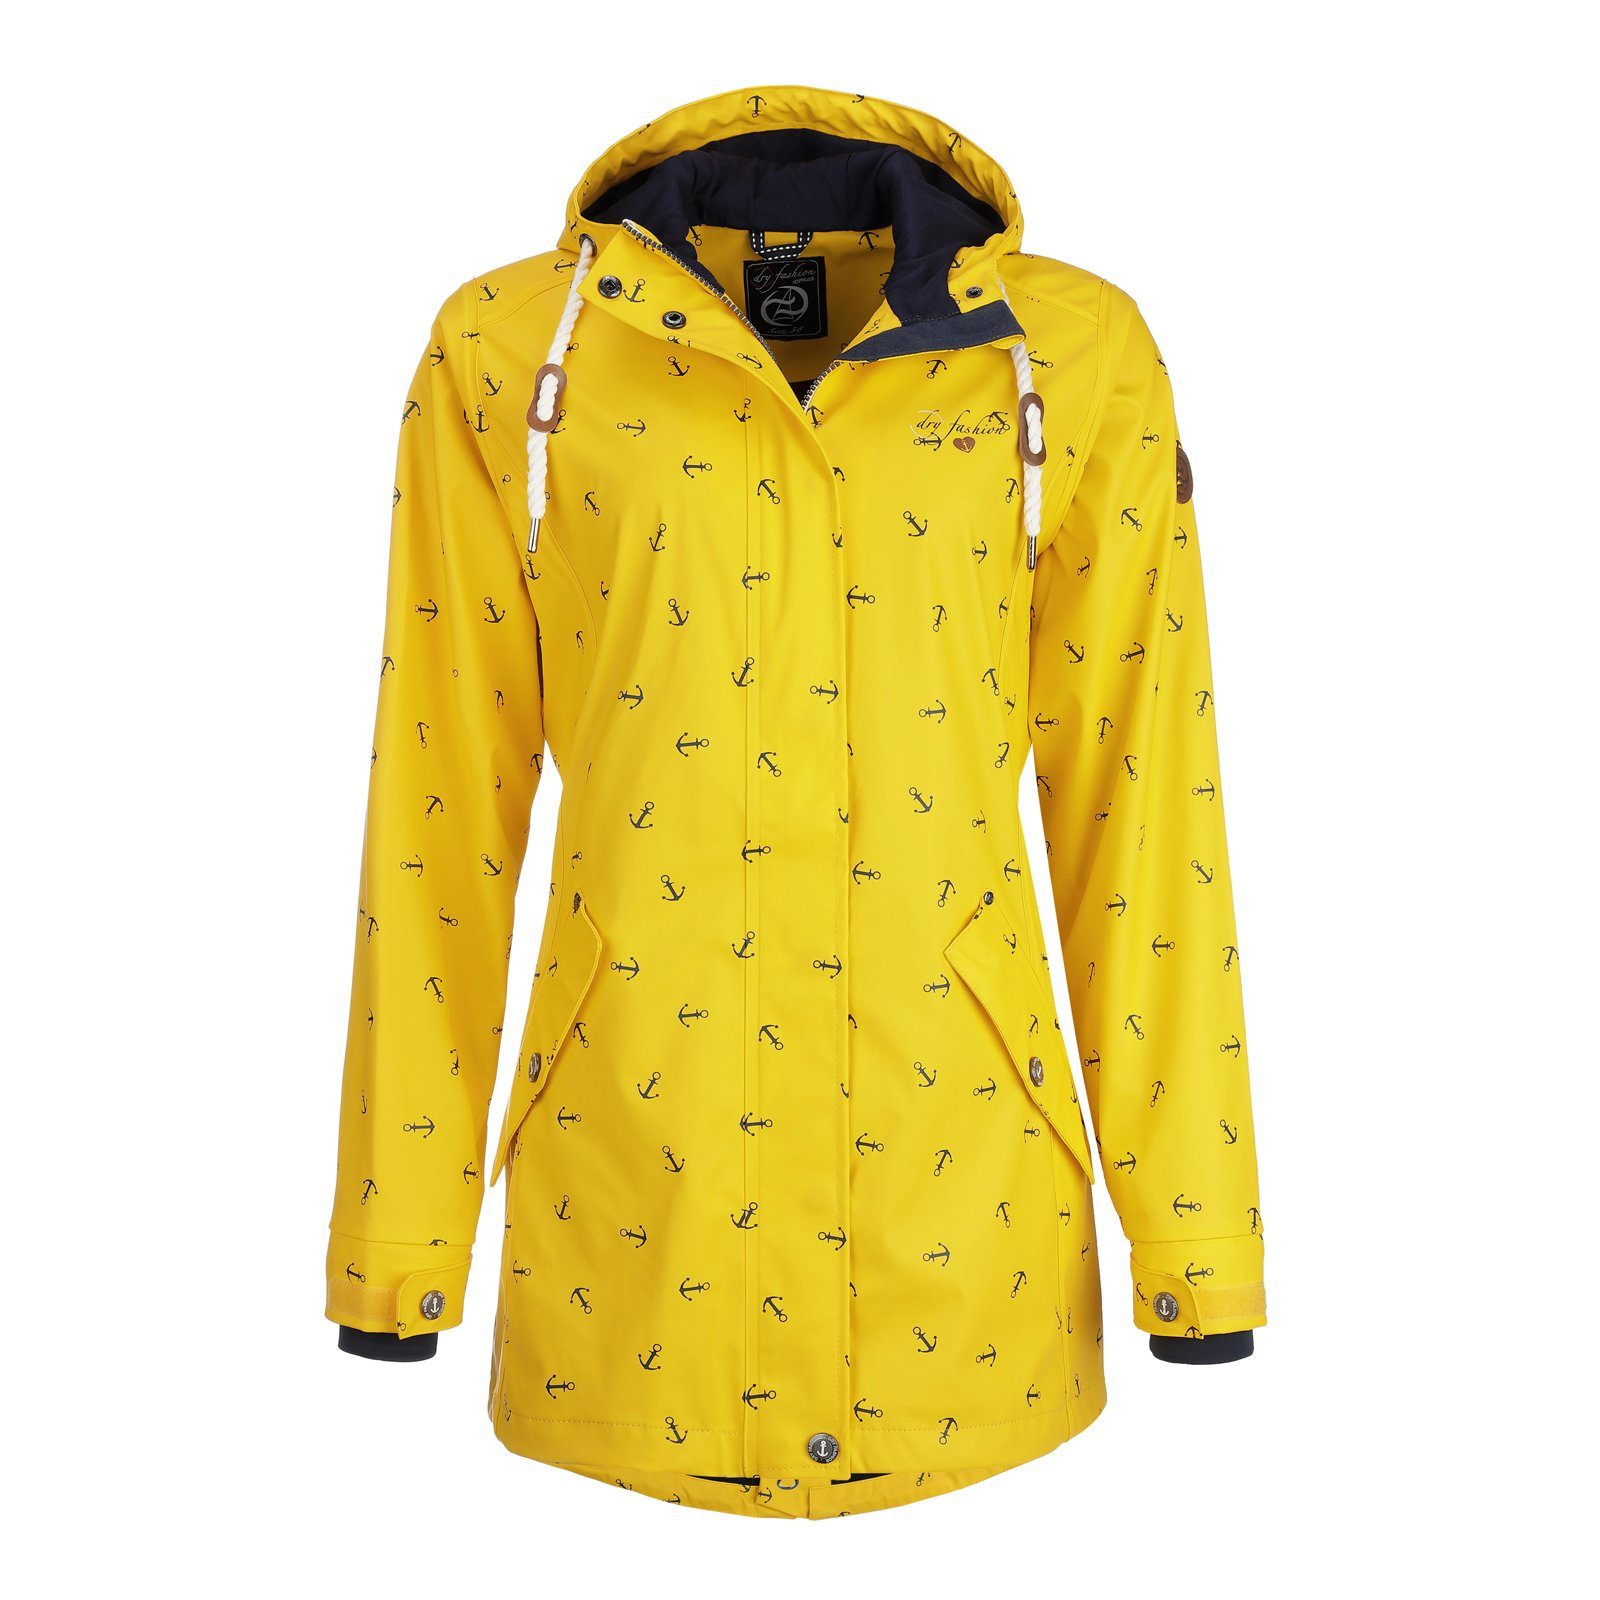 Dry Fashion Regenjacke Damen Regenmantel Cuxhaven - Anker-Print Jacke mit  Kapuze - winddicht und wasserdicht